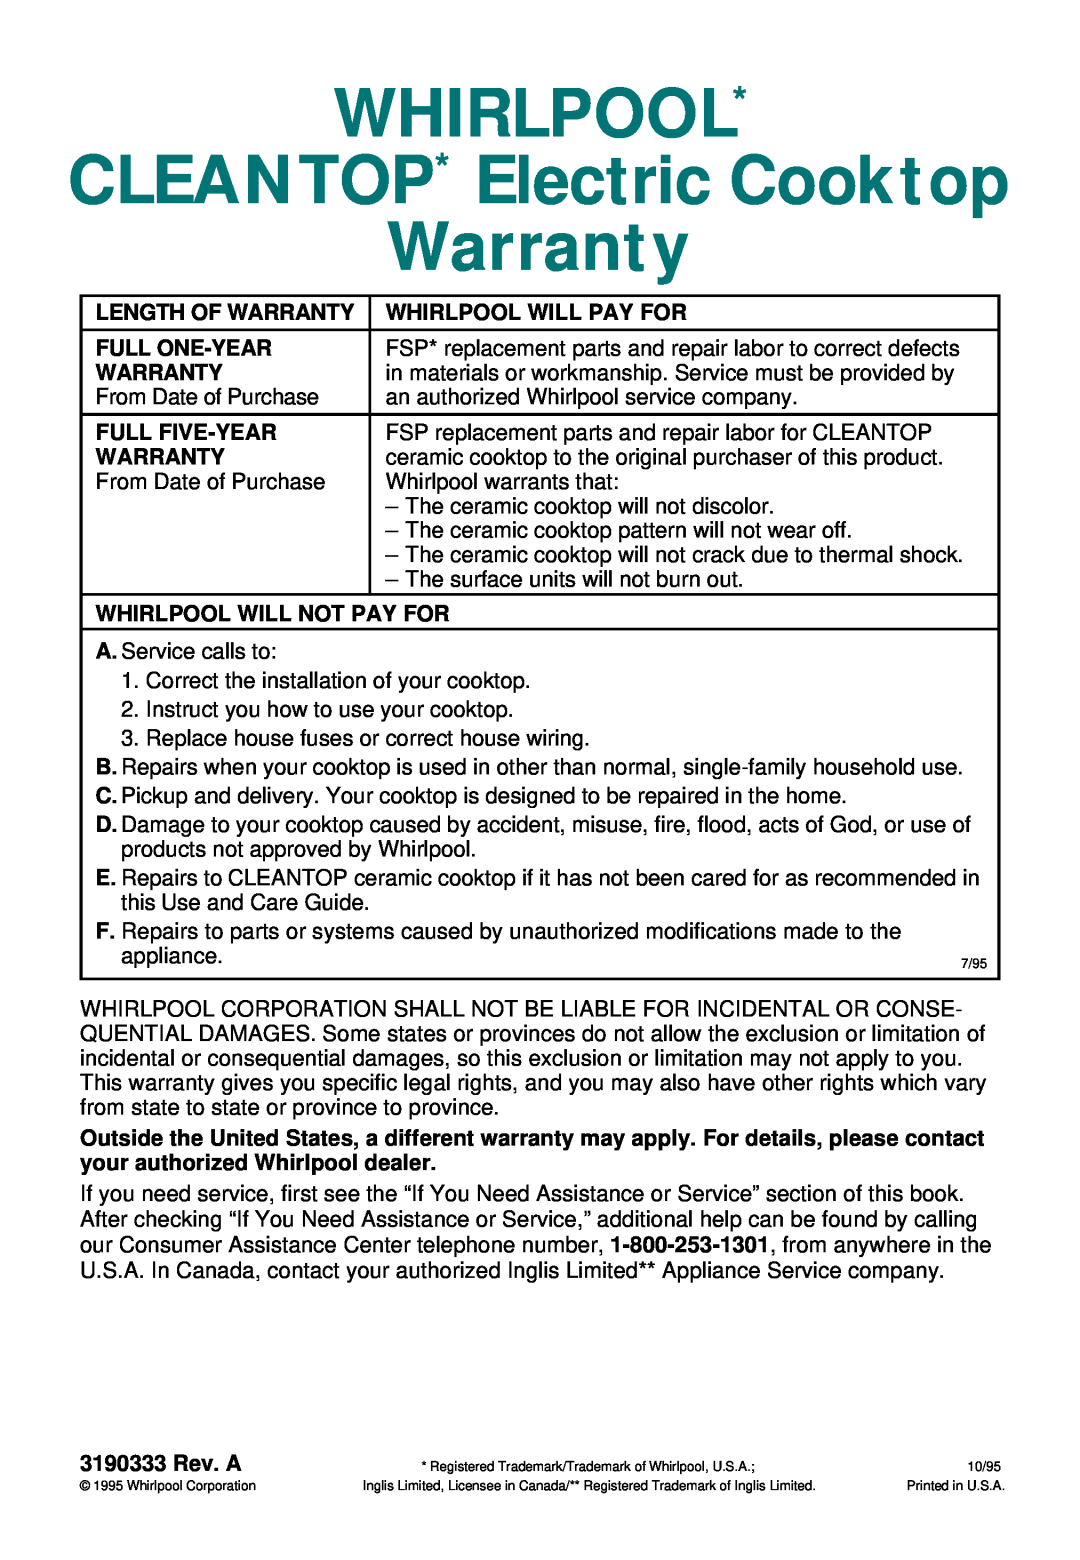 Whirlpool RC8600XD WHIRLPOOL CLEANTOP* Electric Cooktop Warranty, 7/95, Registered Trademark/Trademark of Whirlpool, U.S.A 